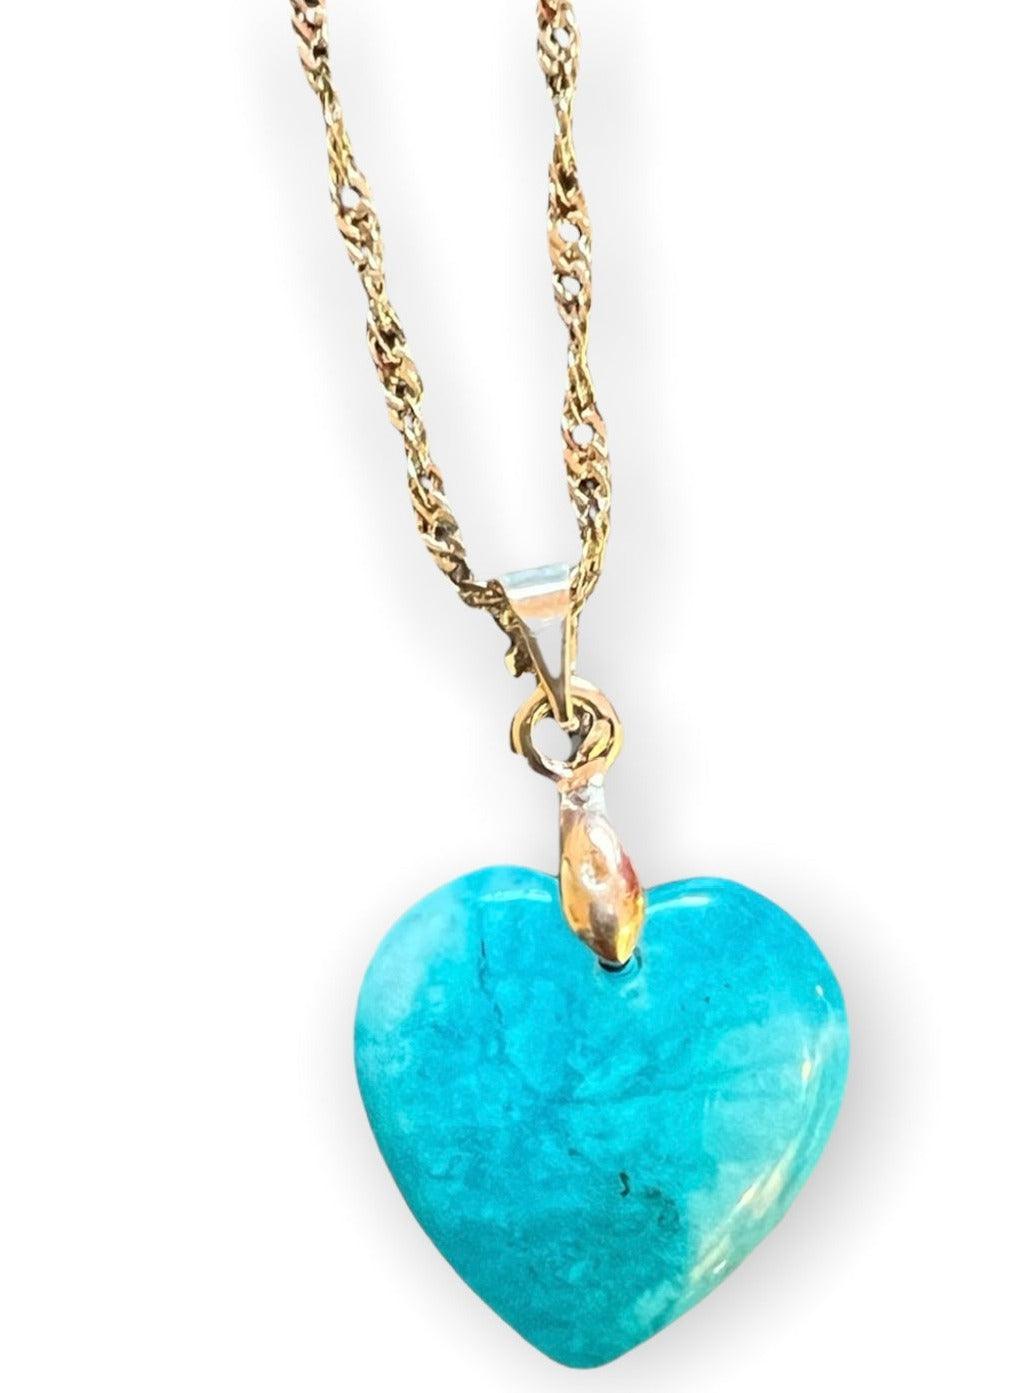 Jade Heart Necklace | Heart Jade Pendant | AriJah's BOX